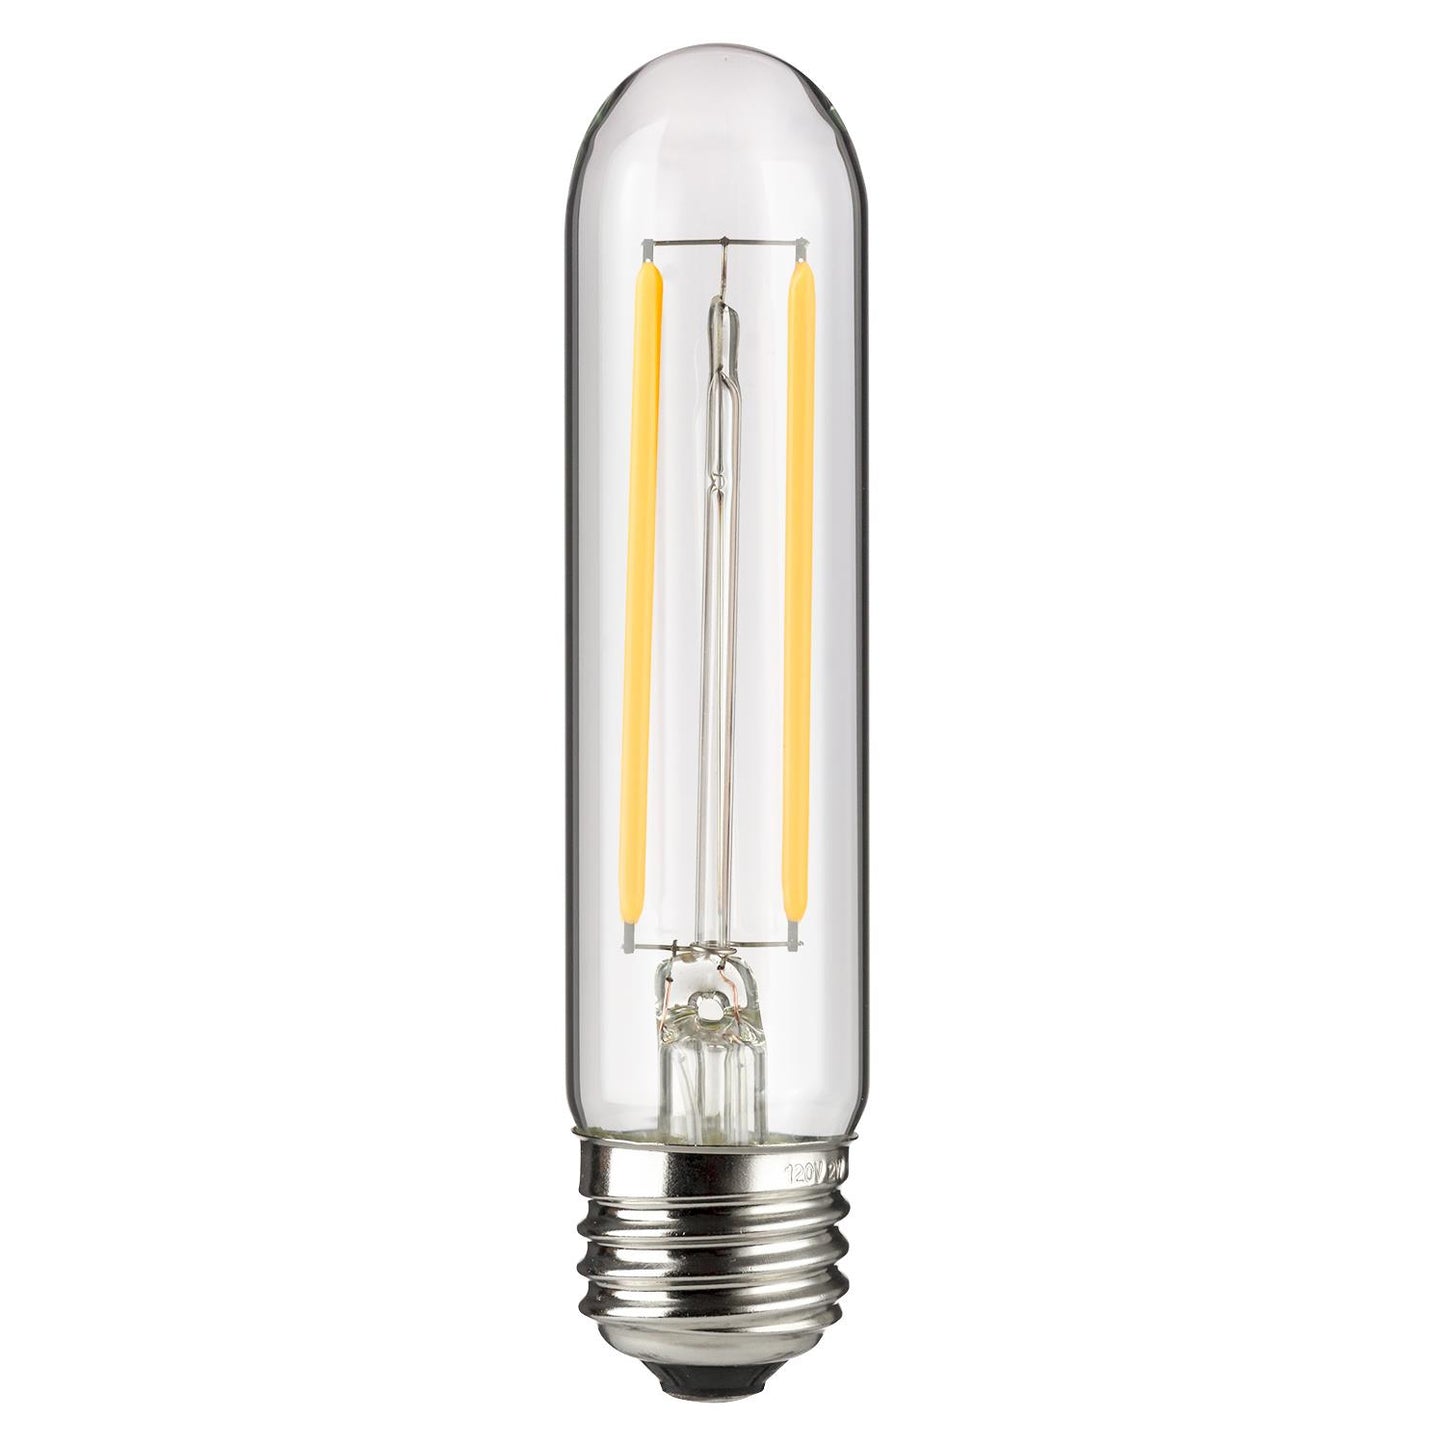 Sunlite 80615 LED Filament T10 Tubular Light Bulb, 2 Watts (25W Equivalent), 160 Lumens, E26 Base, Dimmable, 126mm, 2700K - Warm White